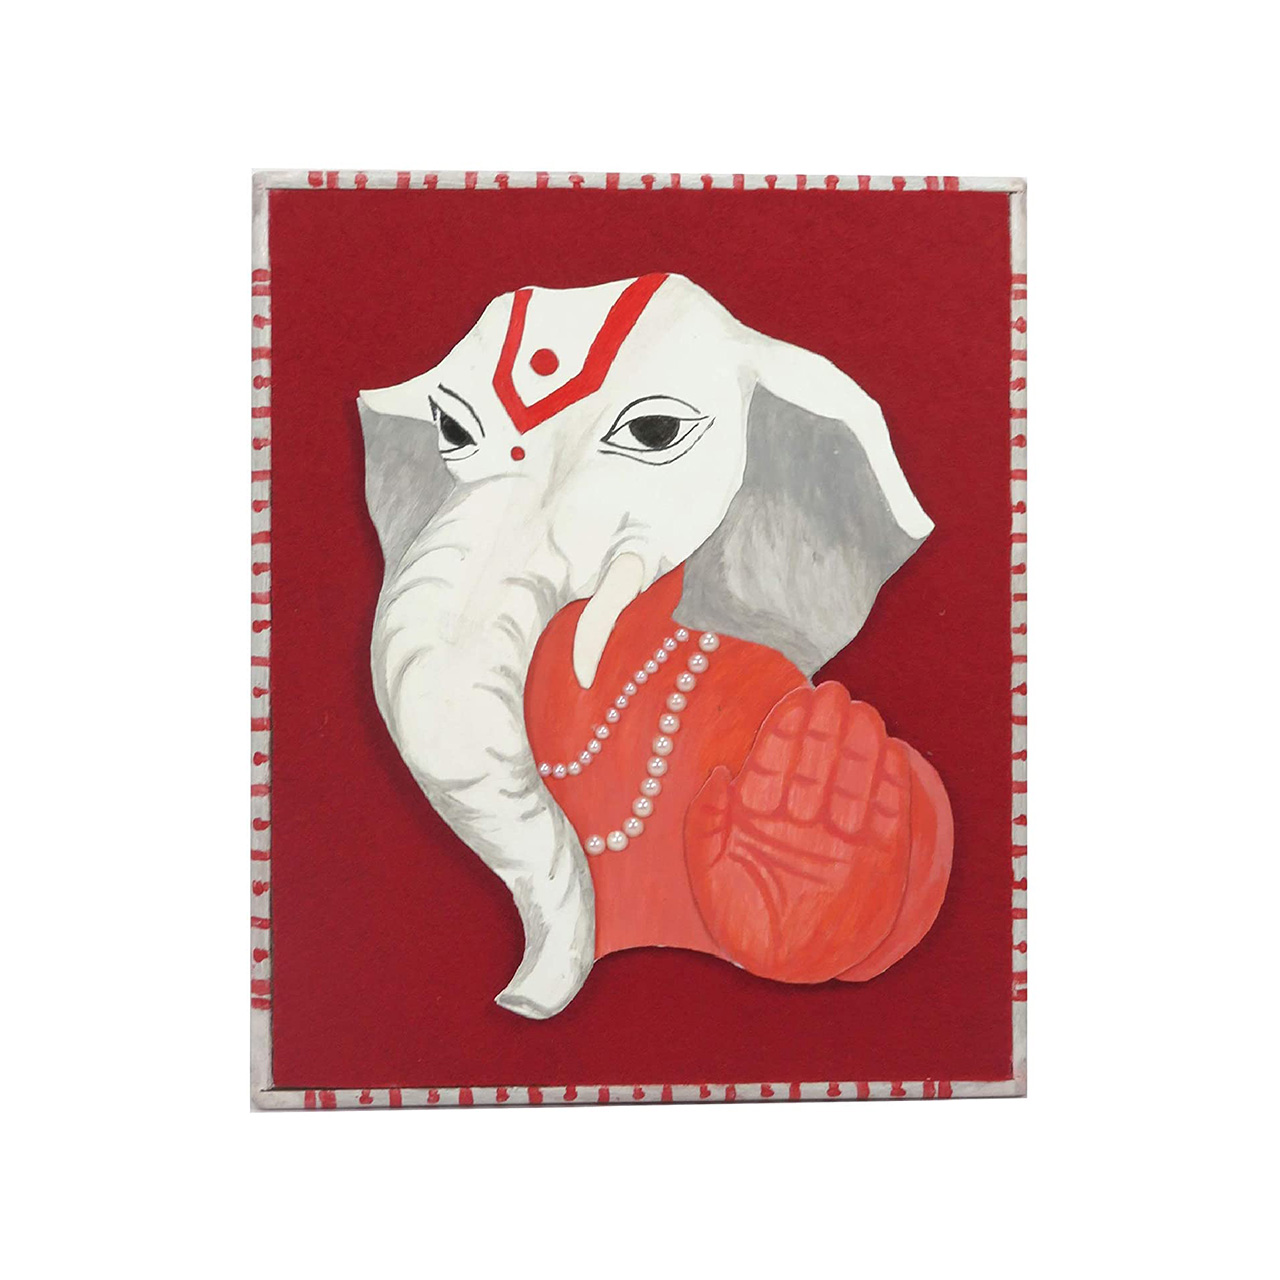 Twaksati Handmade Papercraft Ganesh ji Blessing Wall/Table Decor